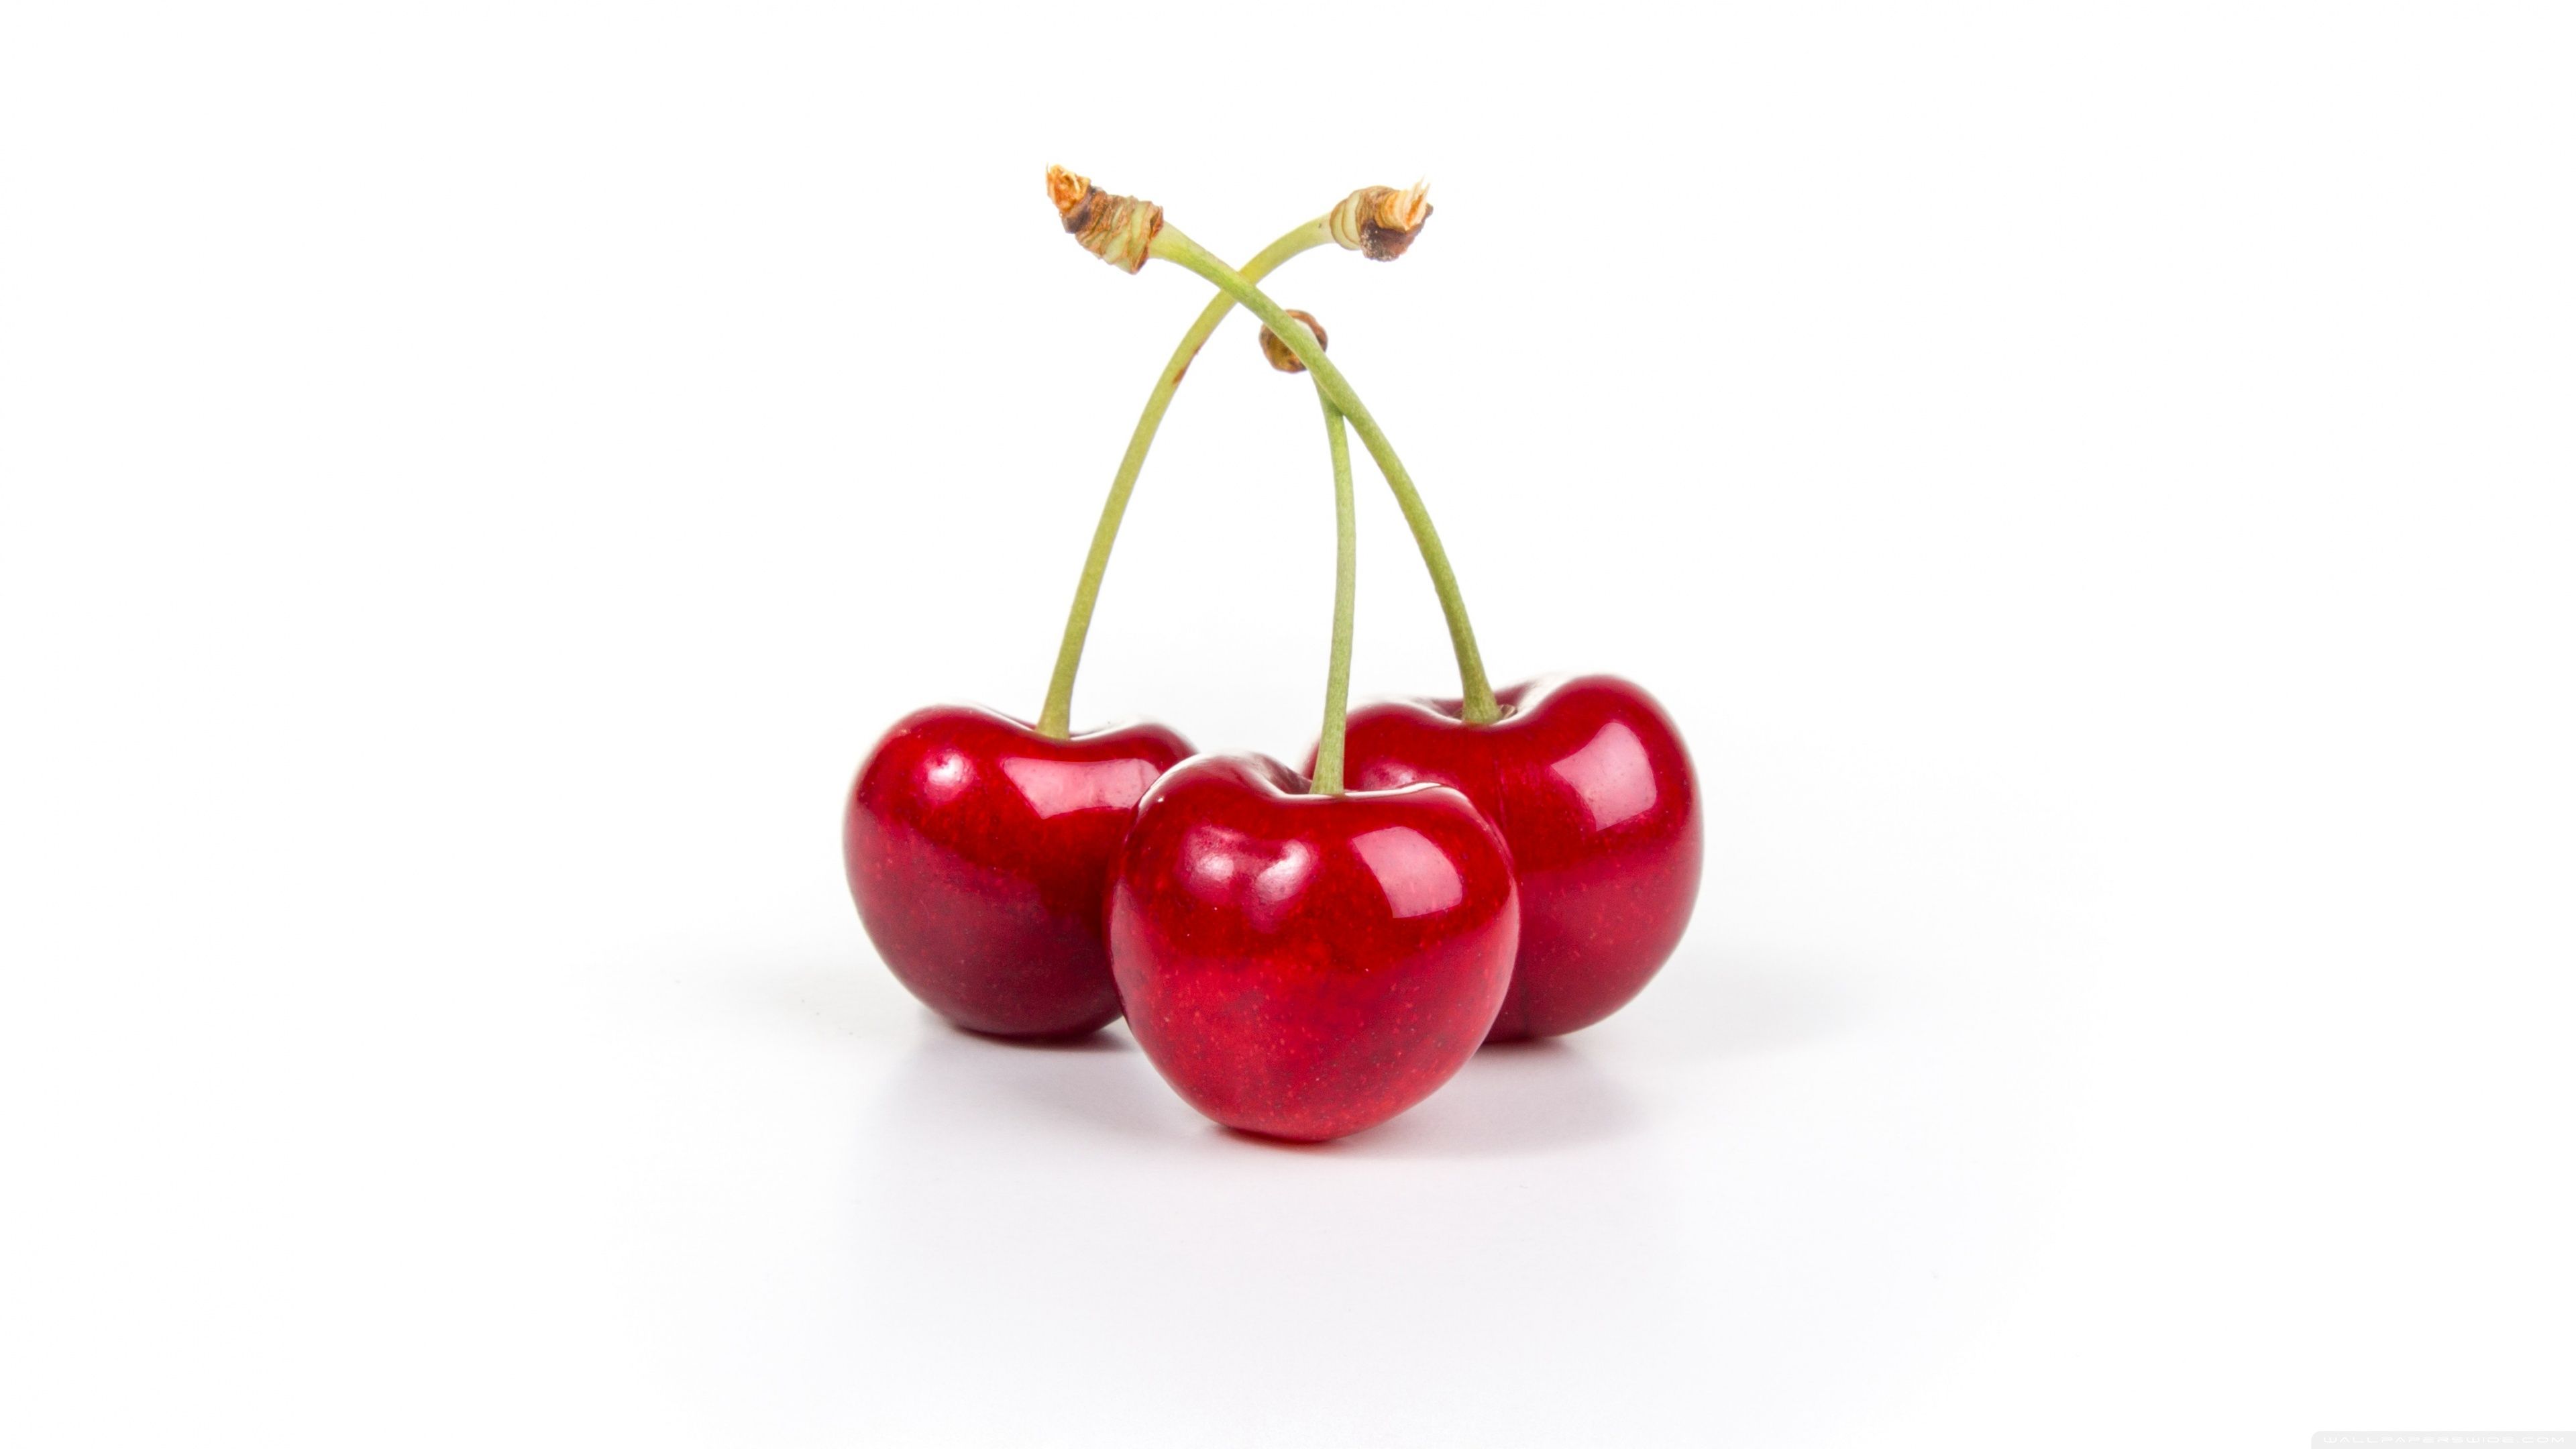 Three cherries on a stem - Fruit, cherry